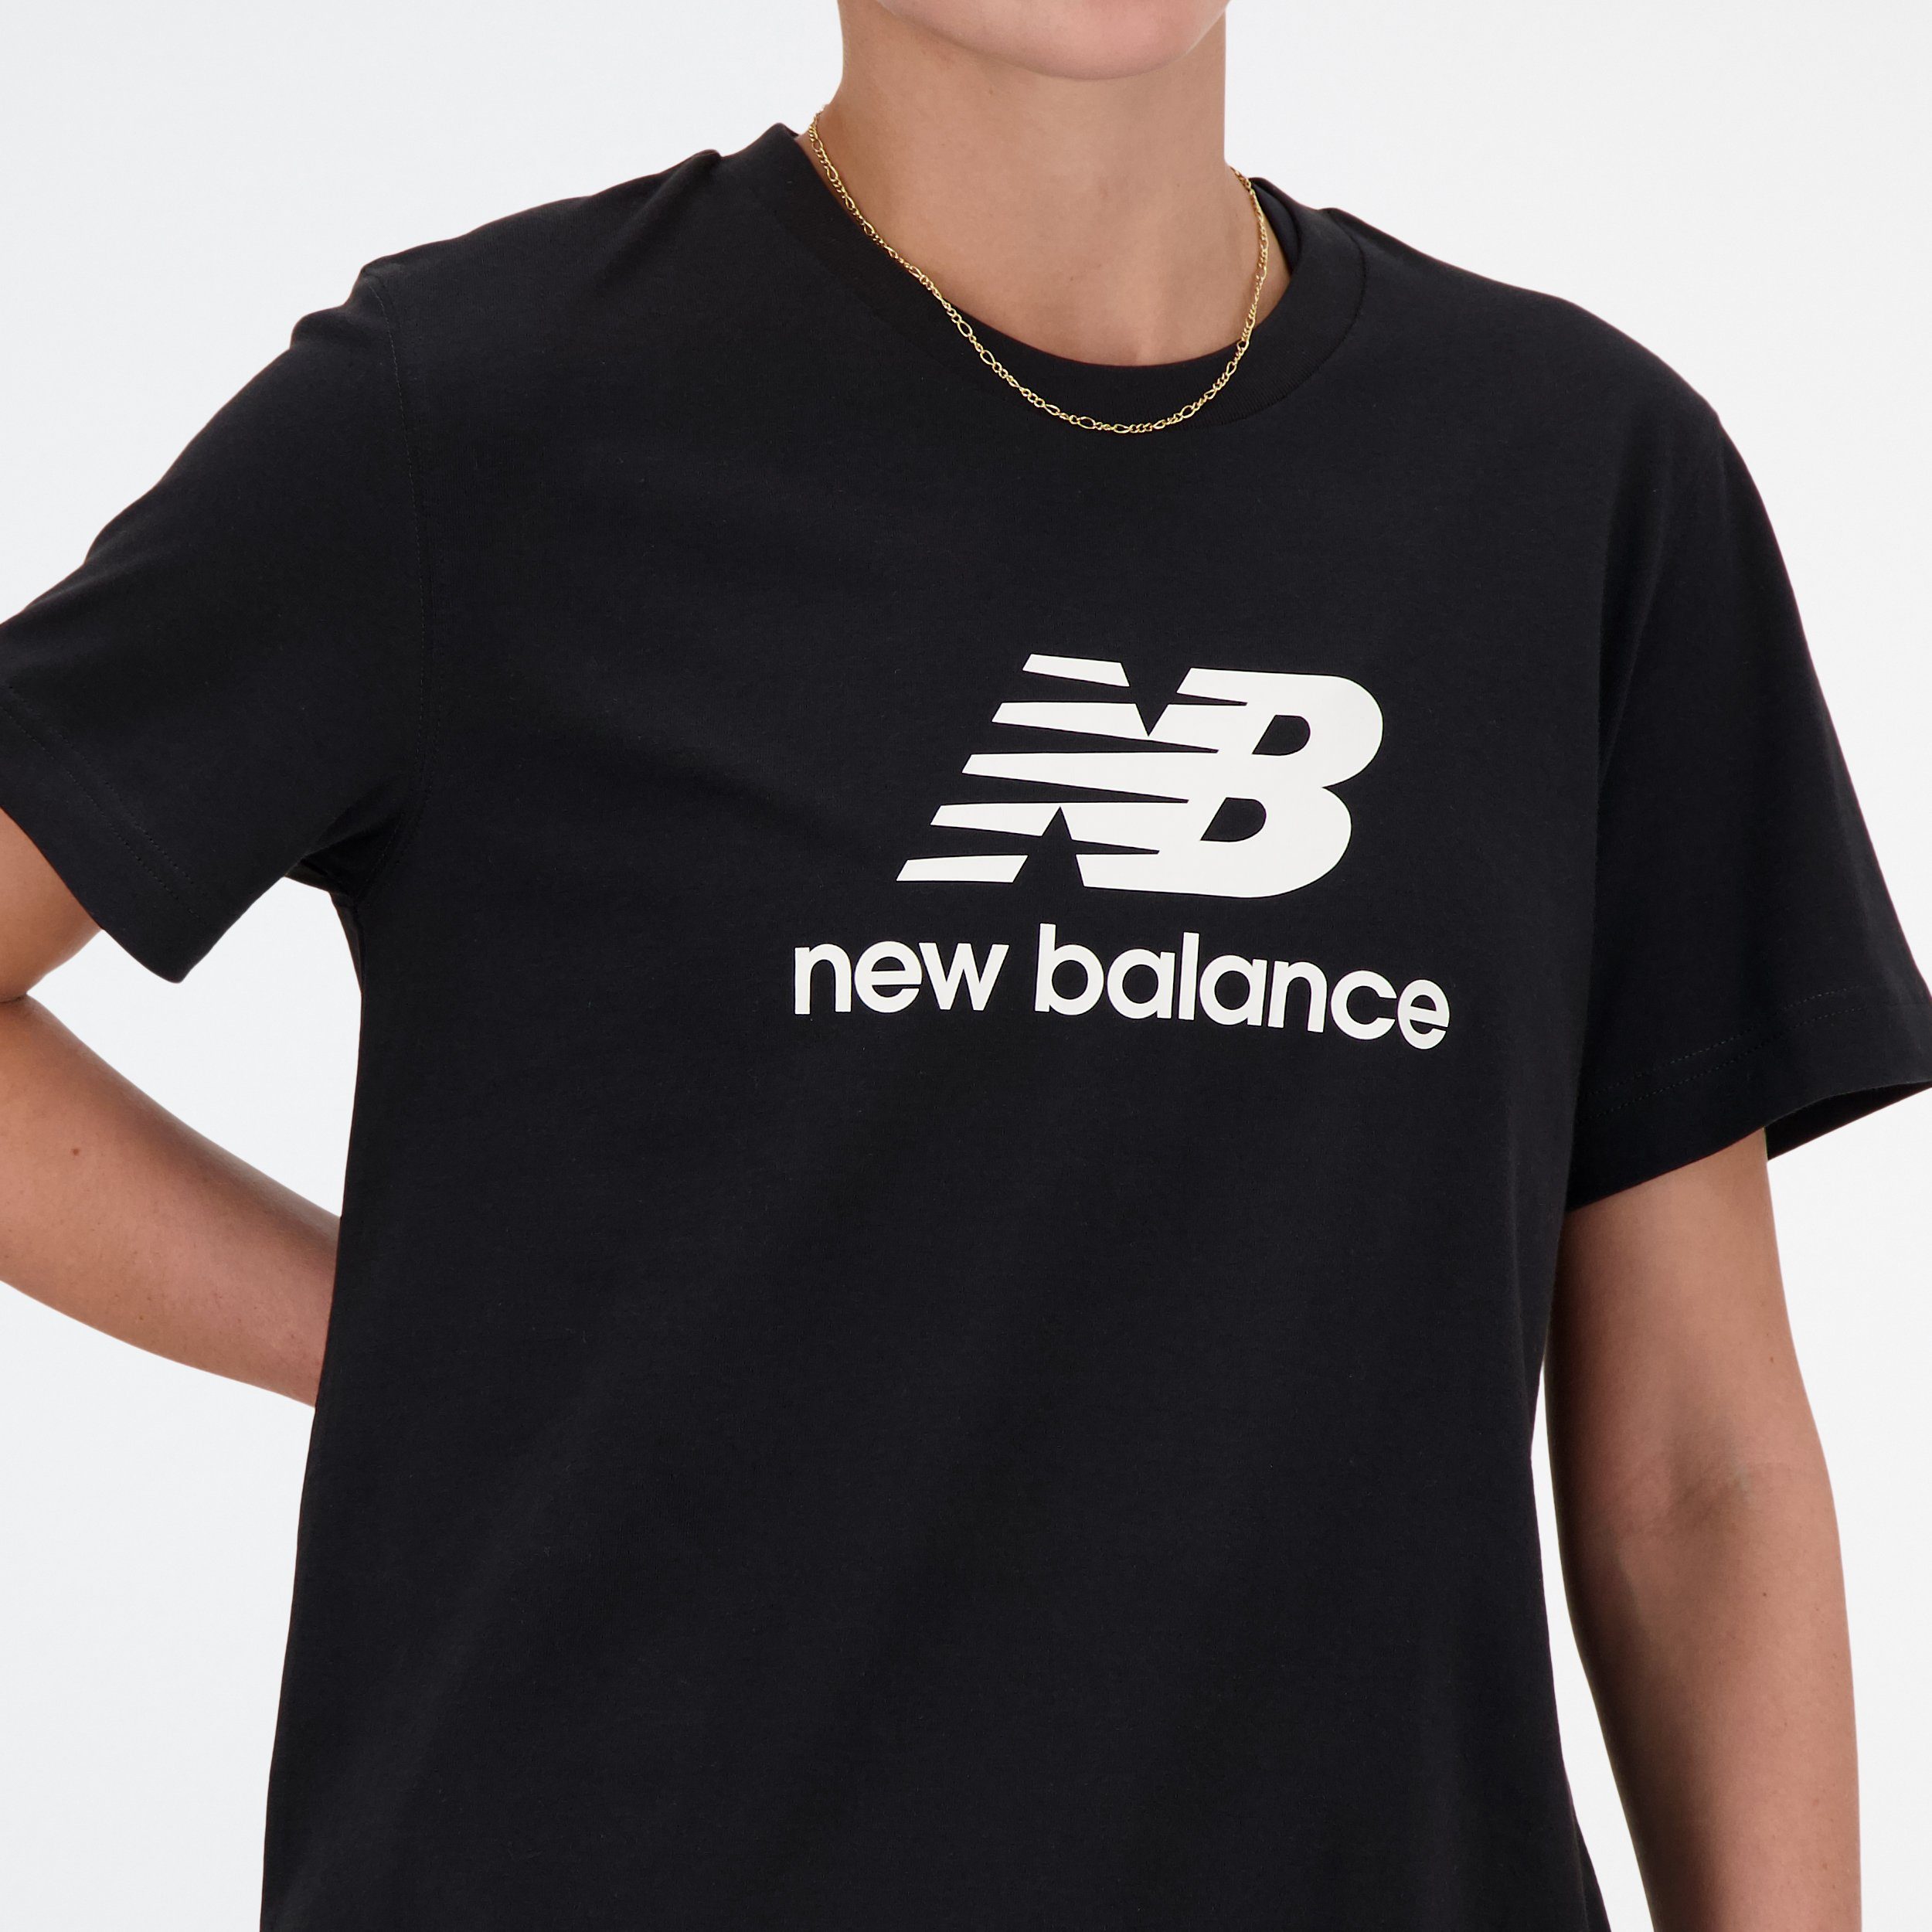 New Balance T-shirt WOMENS LIFESTYLE S S TOP